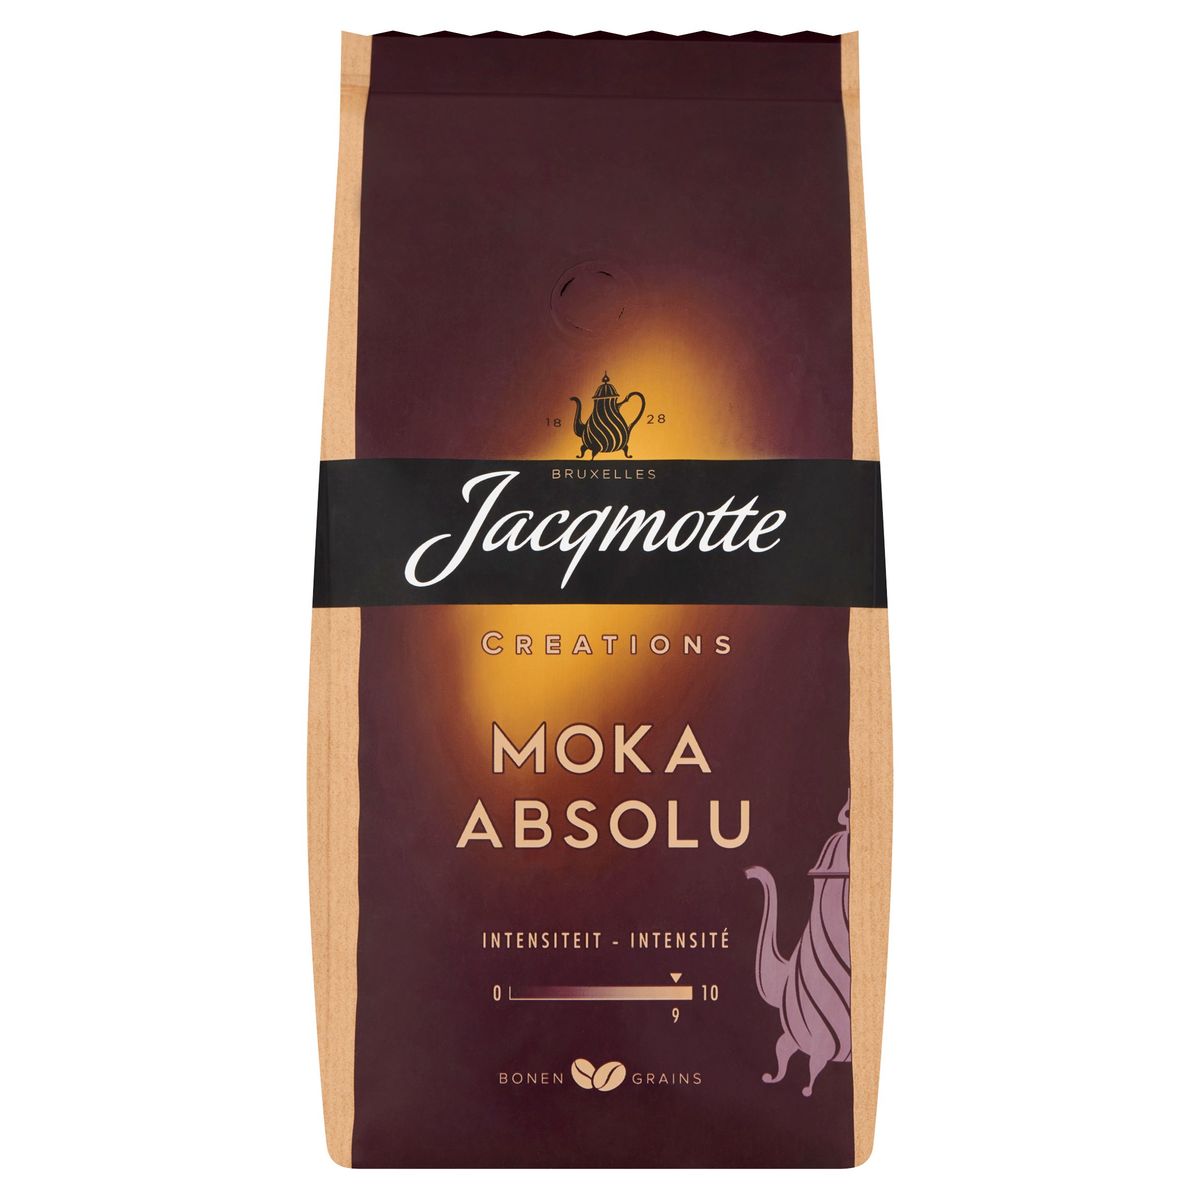 JACQMOTTE Café Grain Moka Absolu 500g